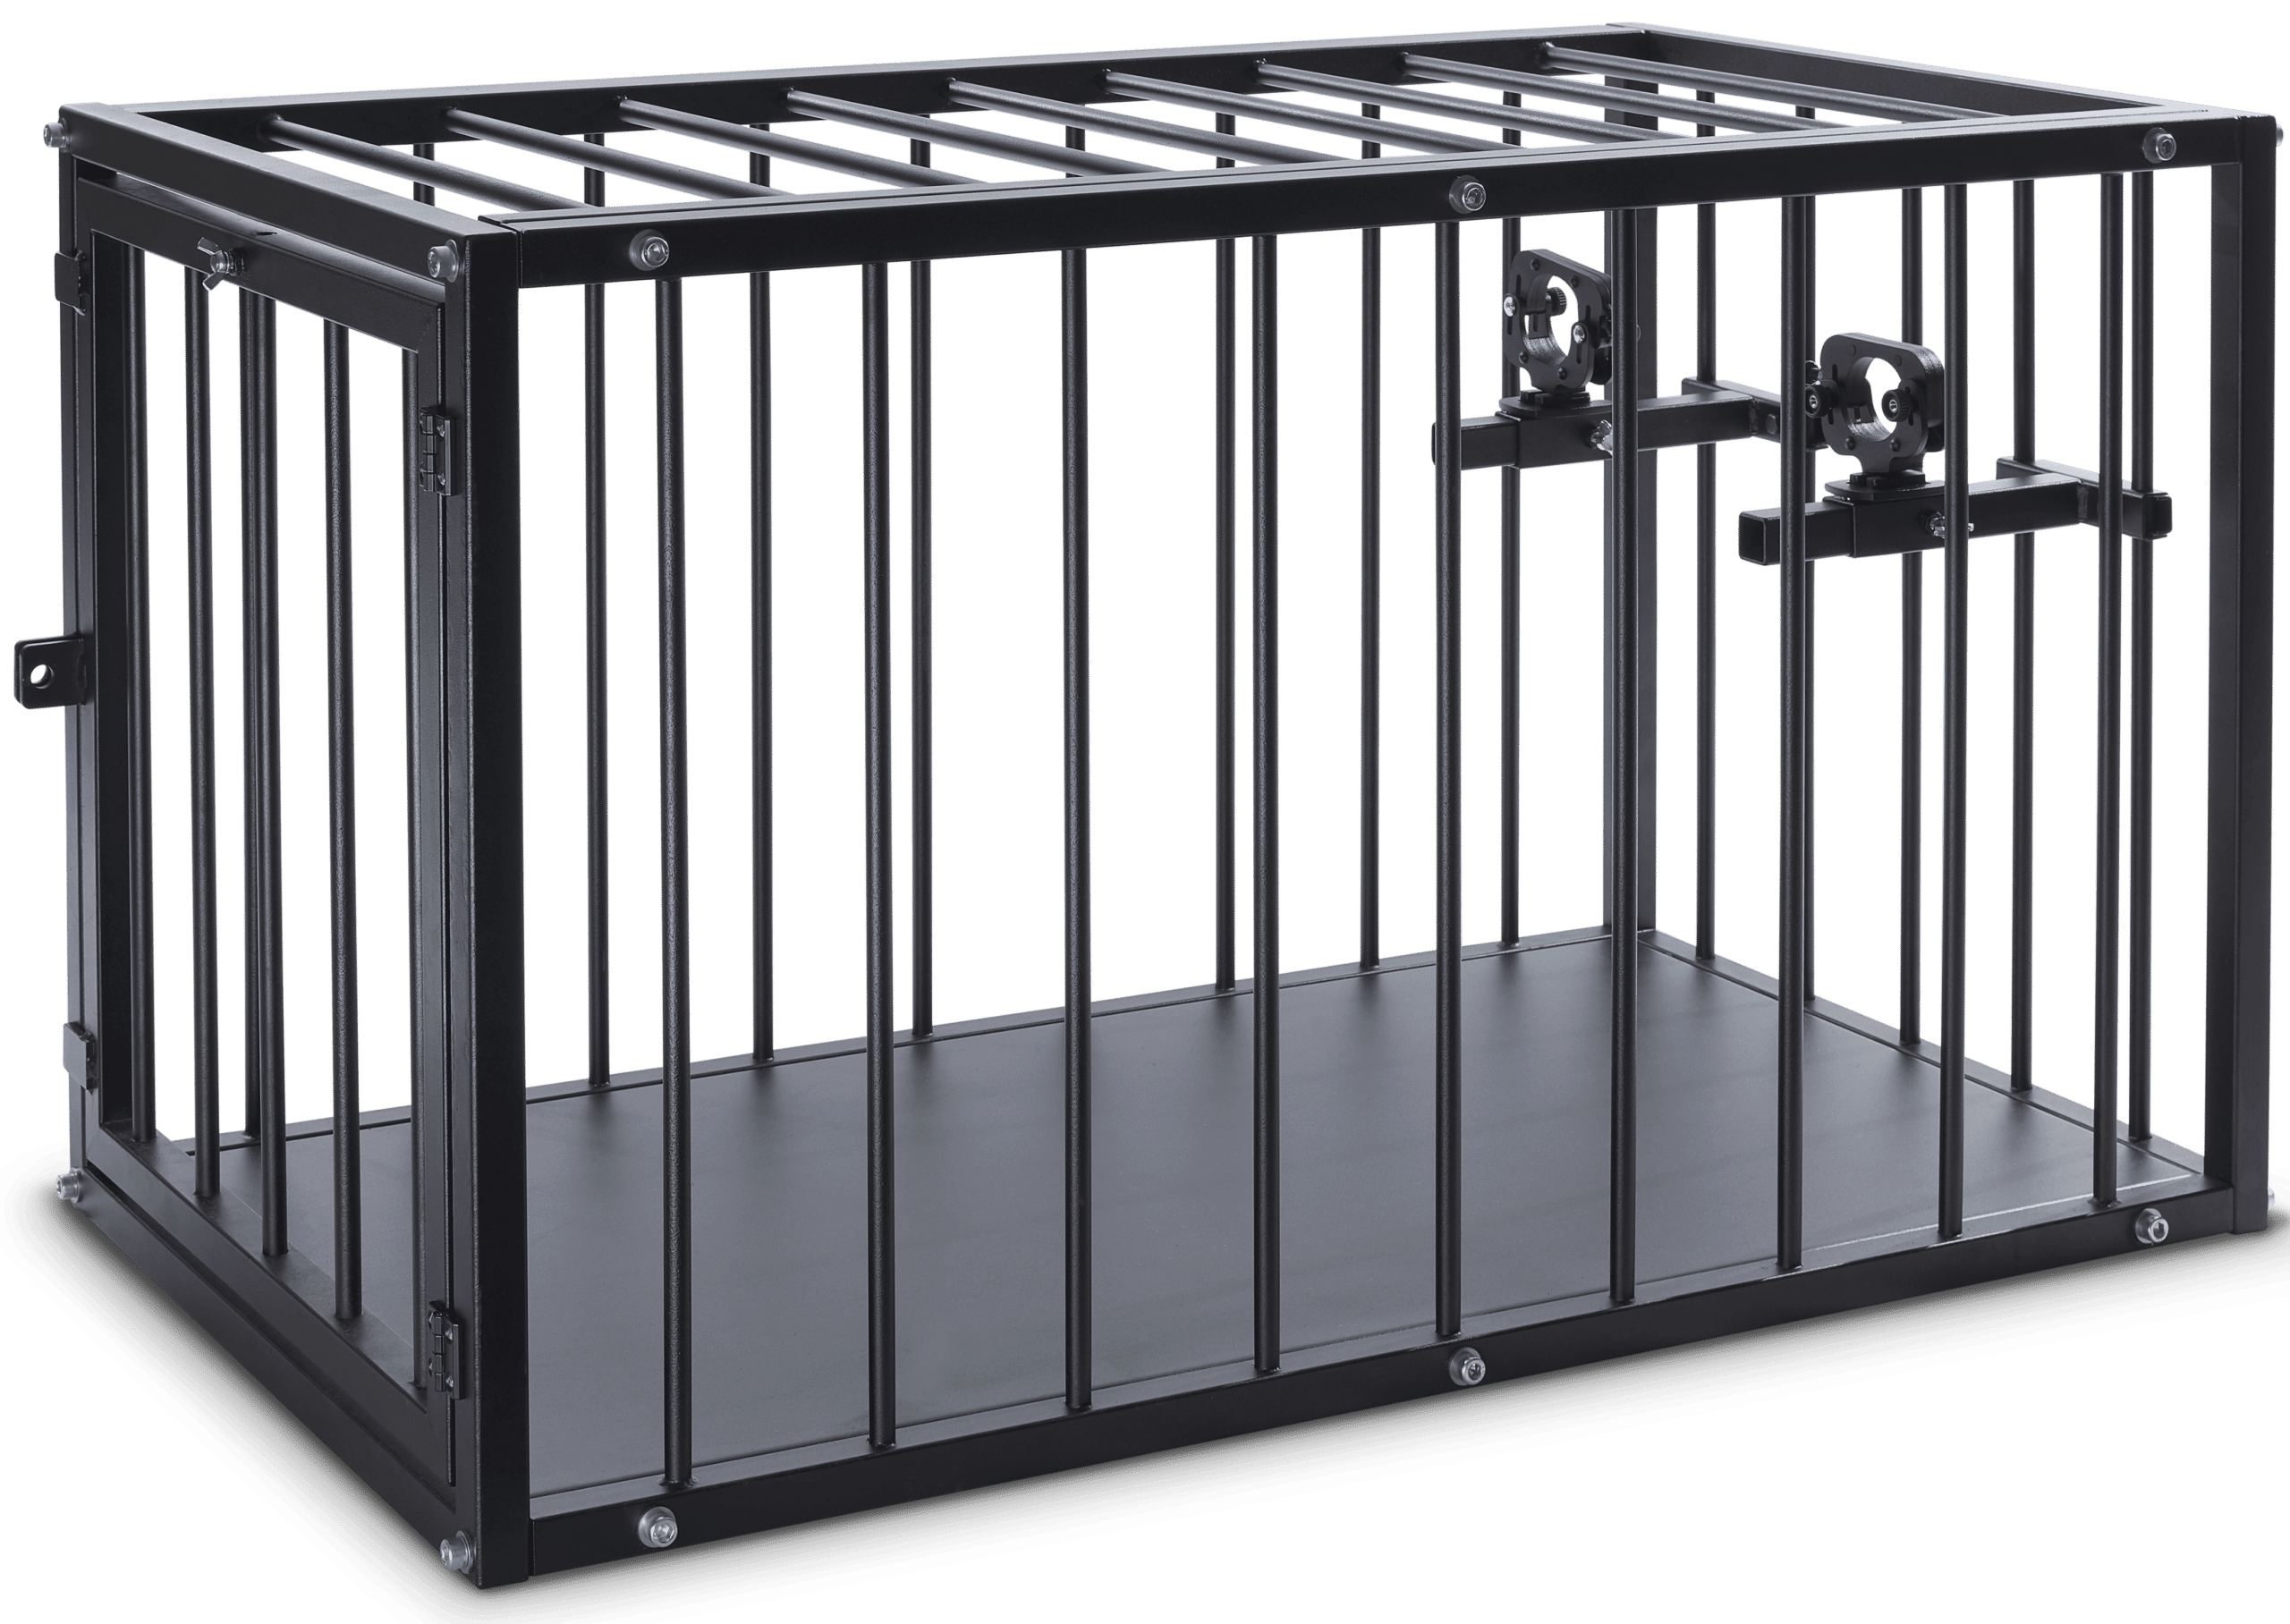 Bdsm Cages Behind Bars